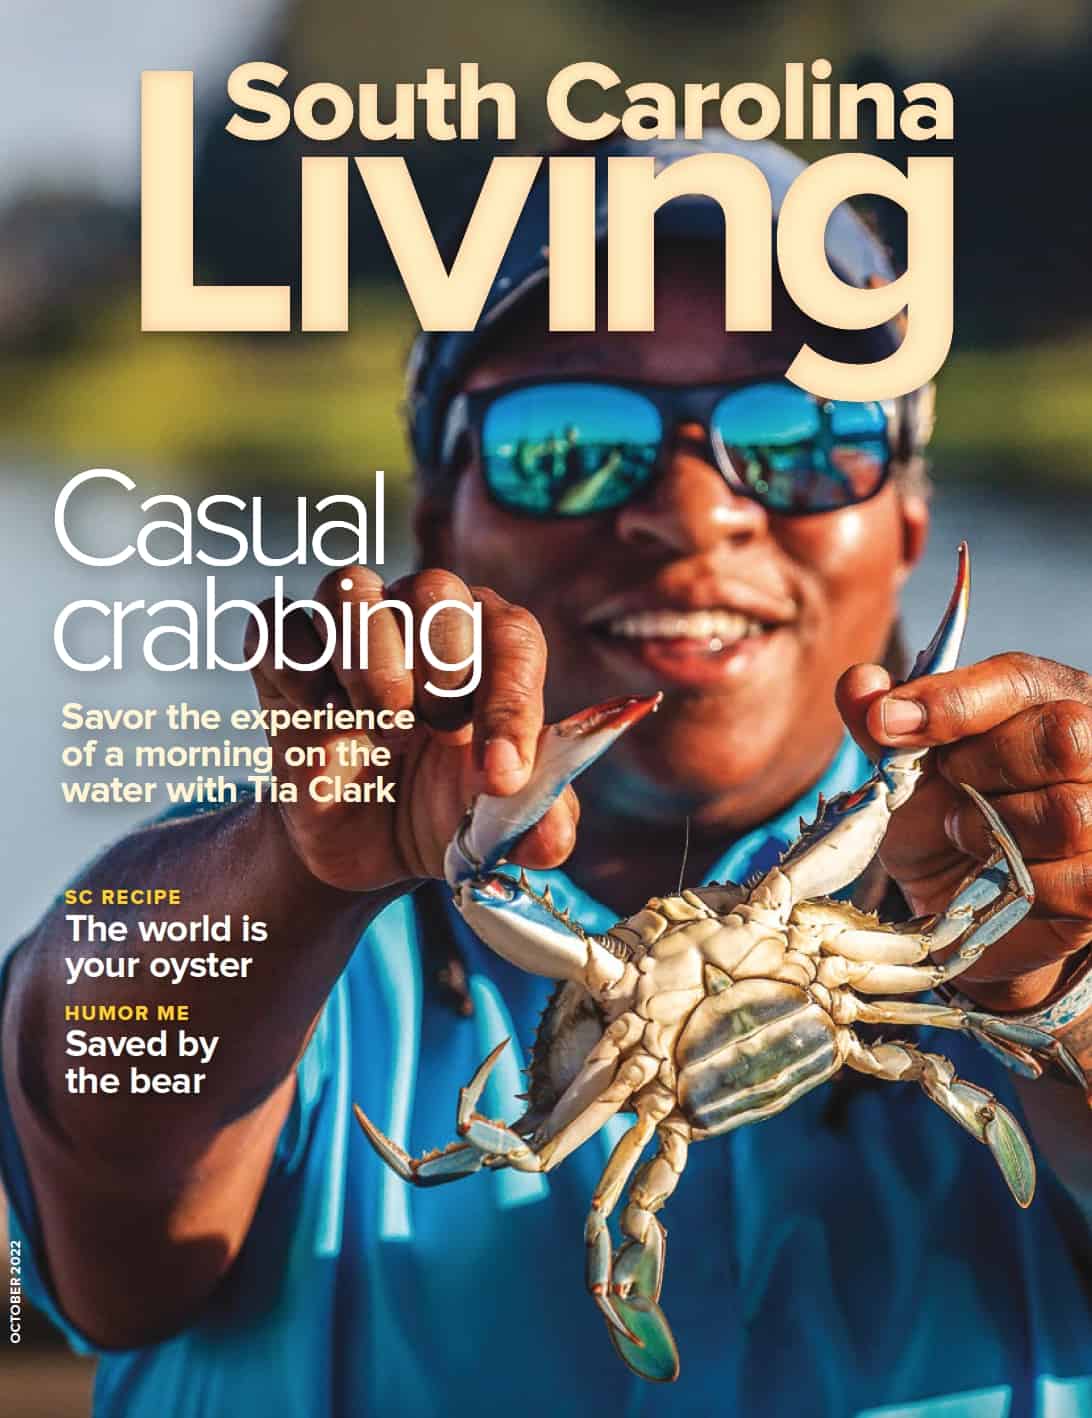 October 2022: Casual crabbing